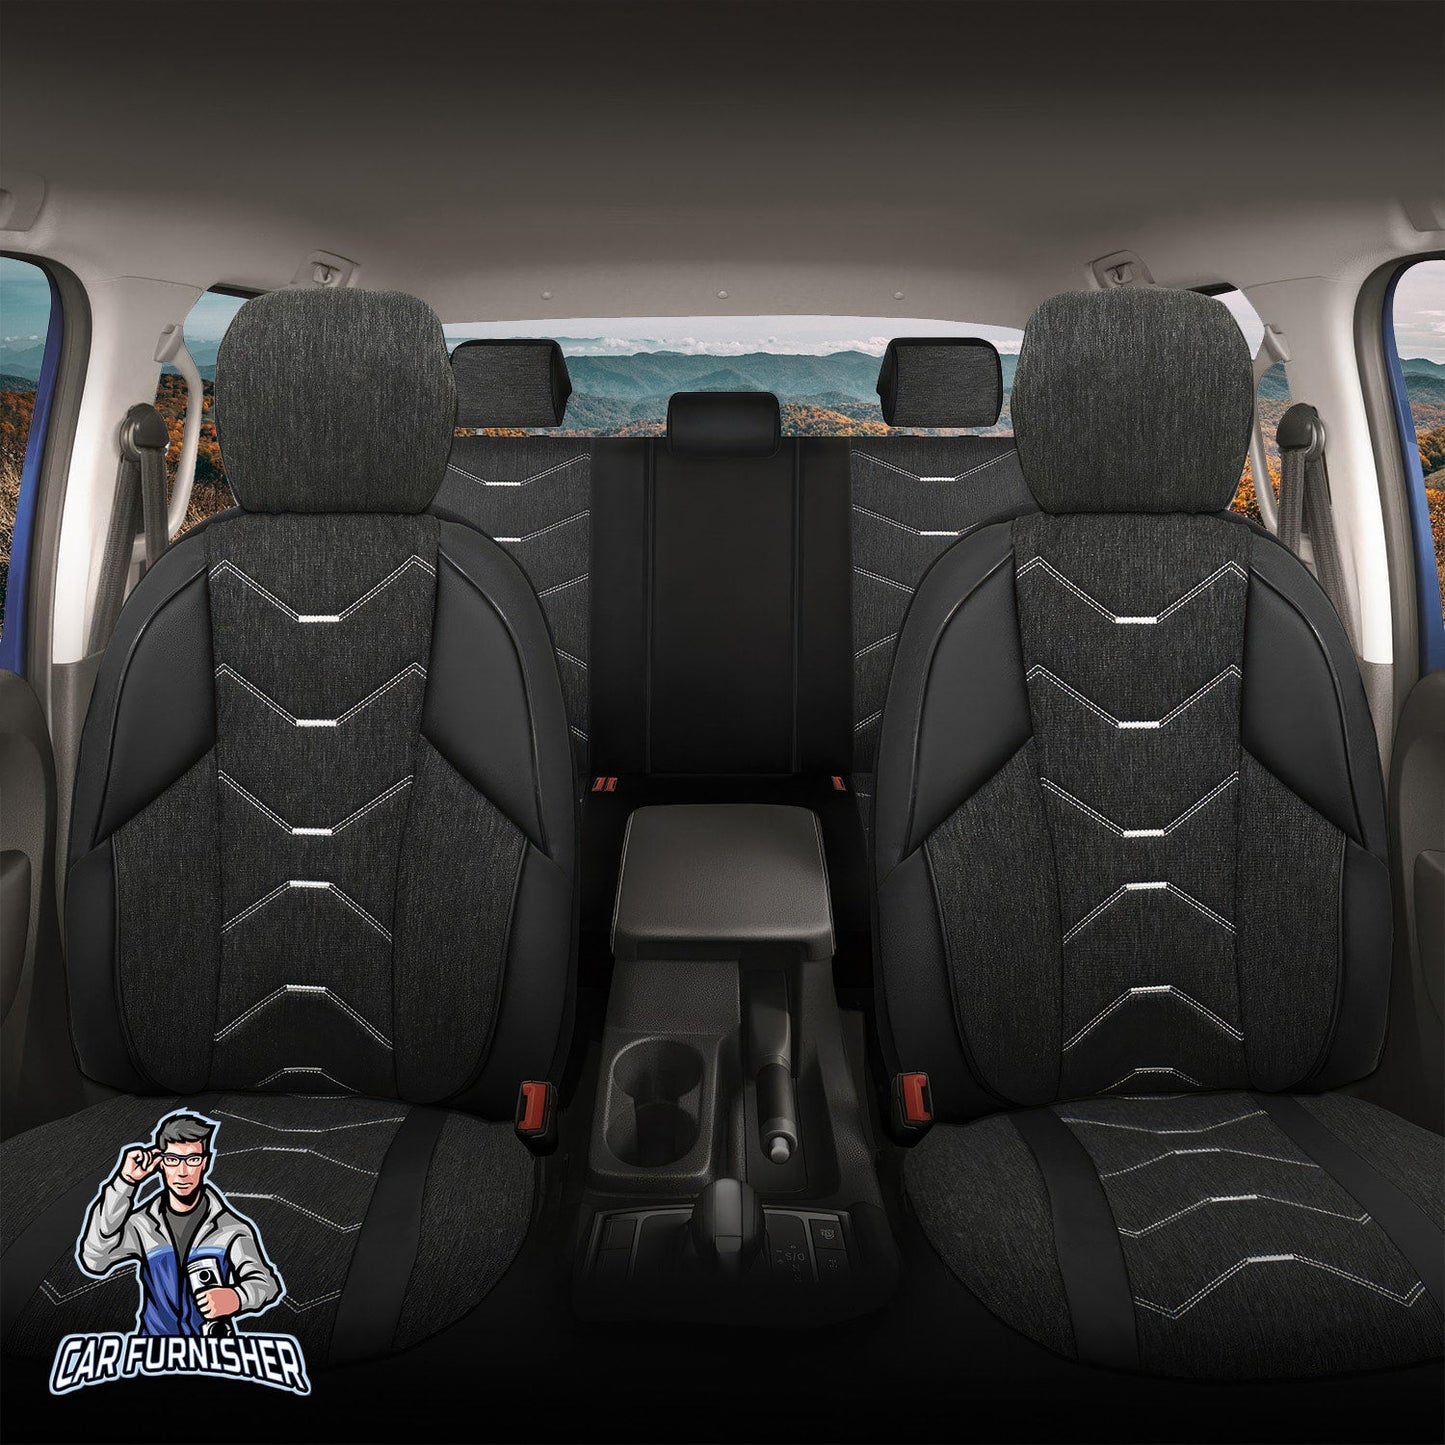 Mercedes 190 Seat Covers Verita Elegance Design Black 5 Seats + Headrests (Full Set) Leather & Linen Fabric